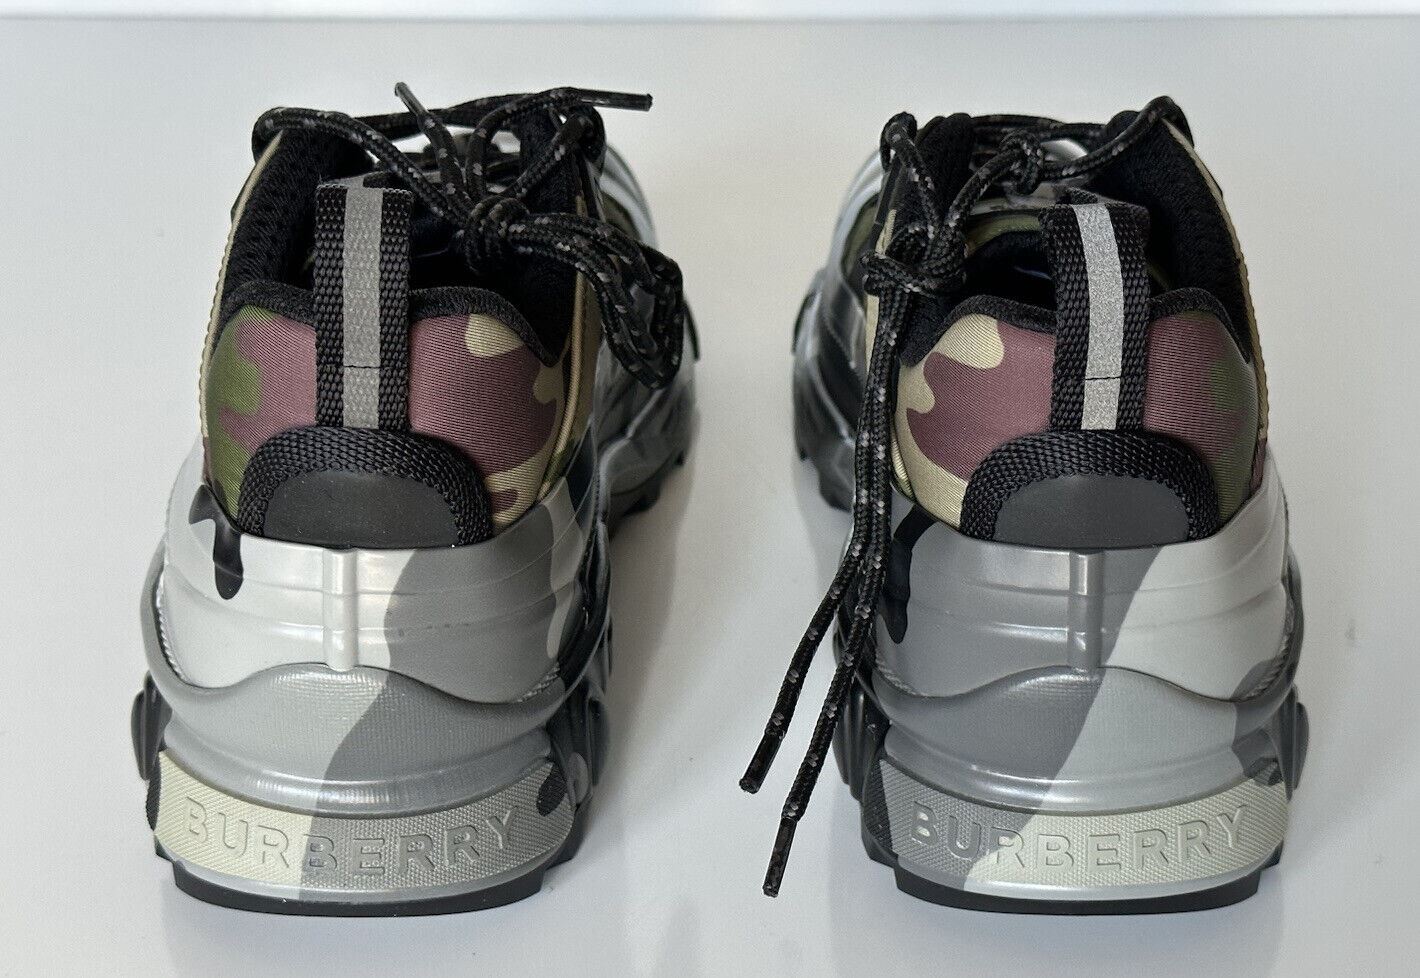 NIB $890 Burberry Herren Arthur Mangrove Green Sneakers 9 US (42 Euro) 8042185 IT 